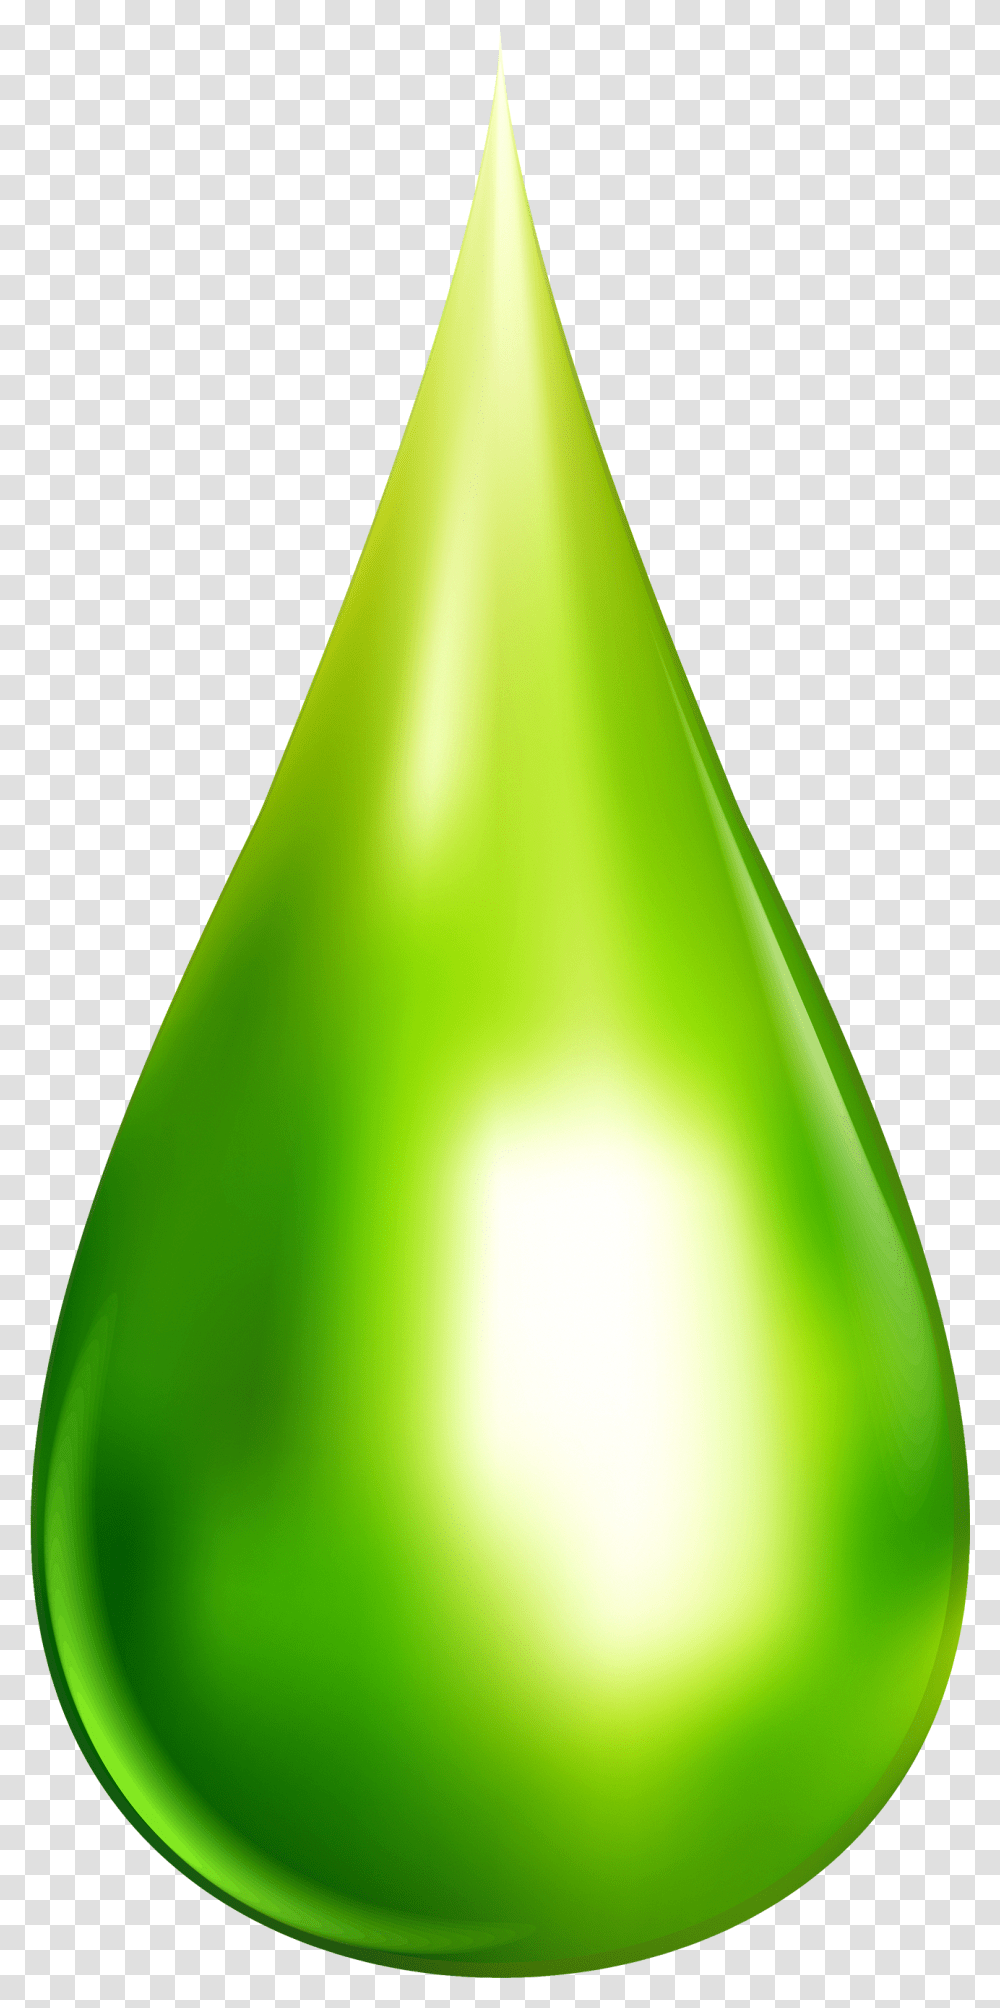 Drop Download Water Dew Green Water Drops Download Green Water Drop, Clothing, Apparel, Beverage, Drink Transparent Png